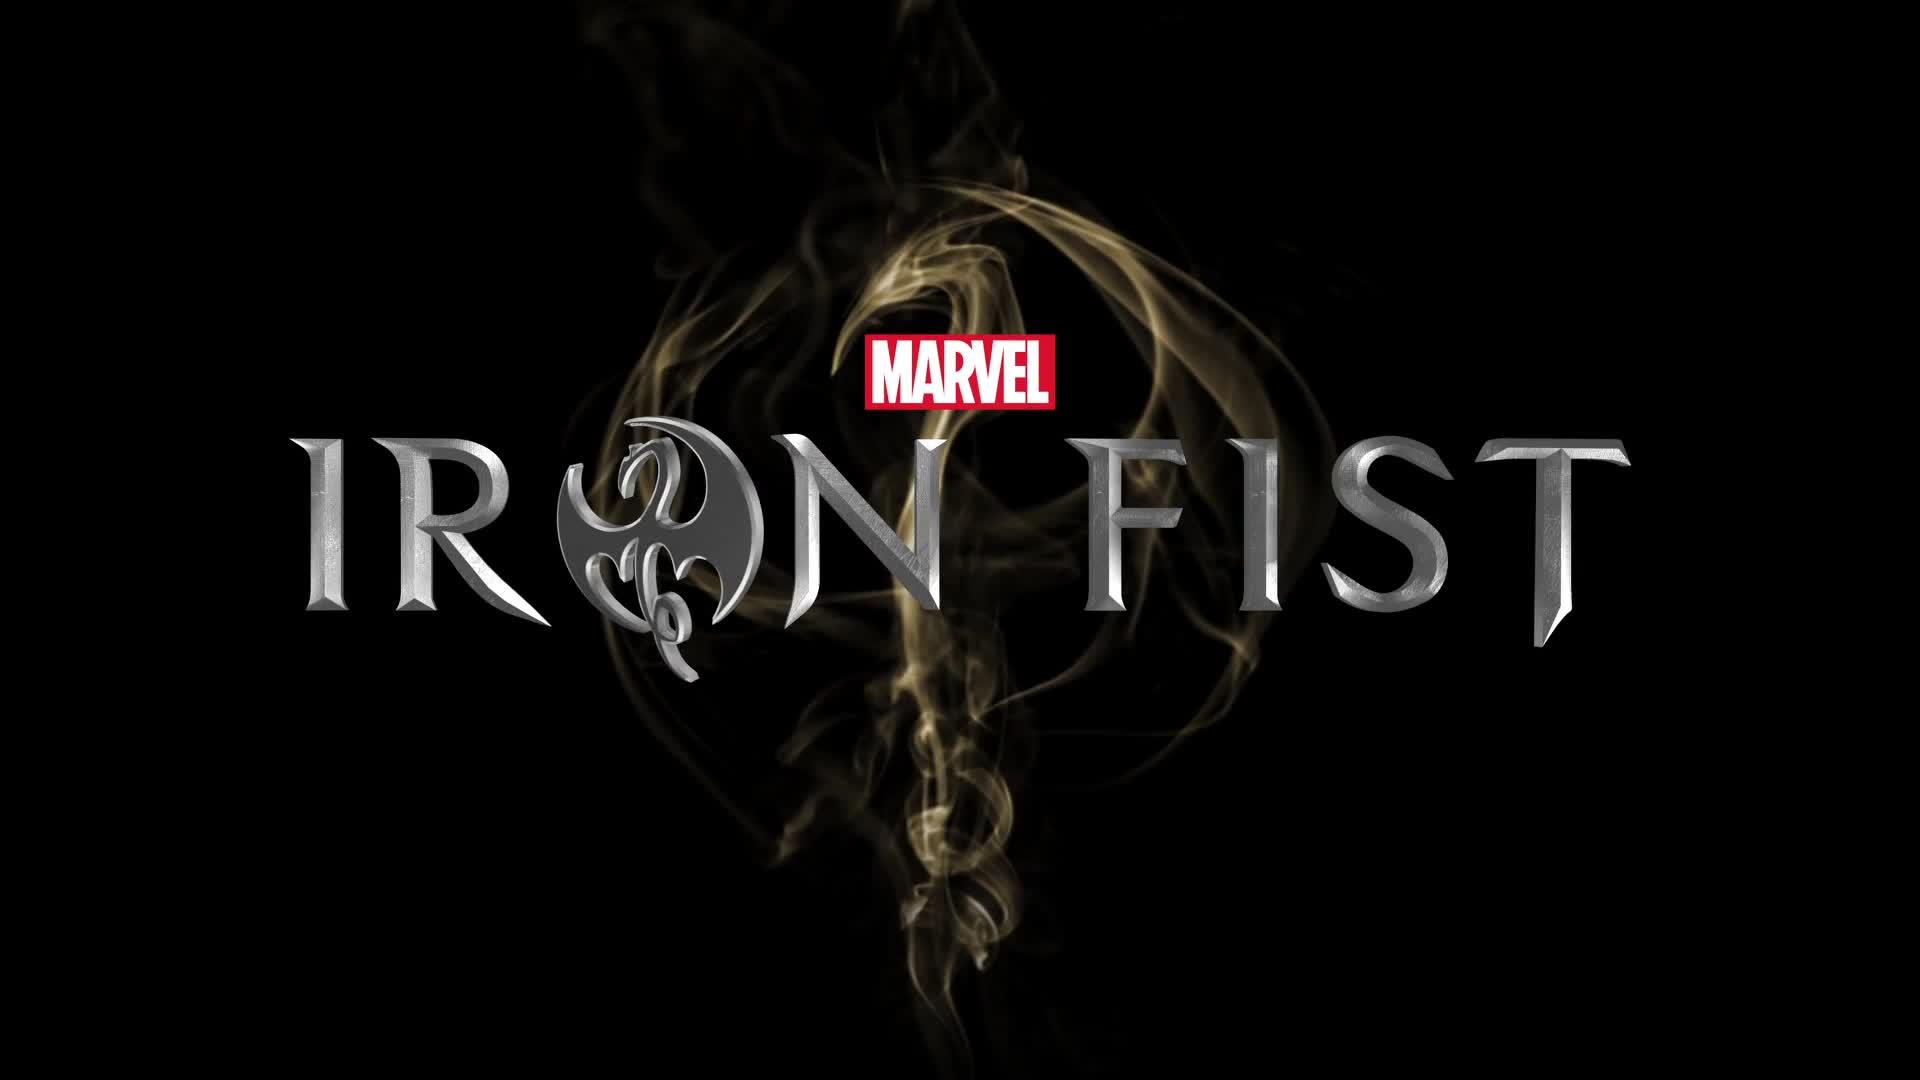 Marvel Iron Fist Logo Wallpaper 65664 1920x1080px